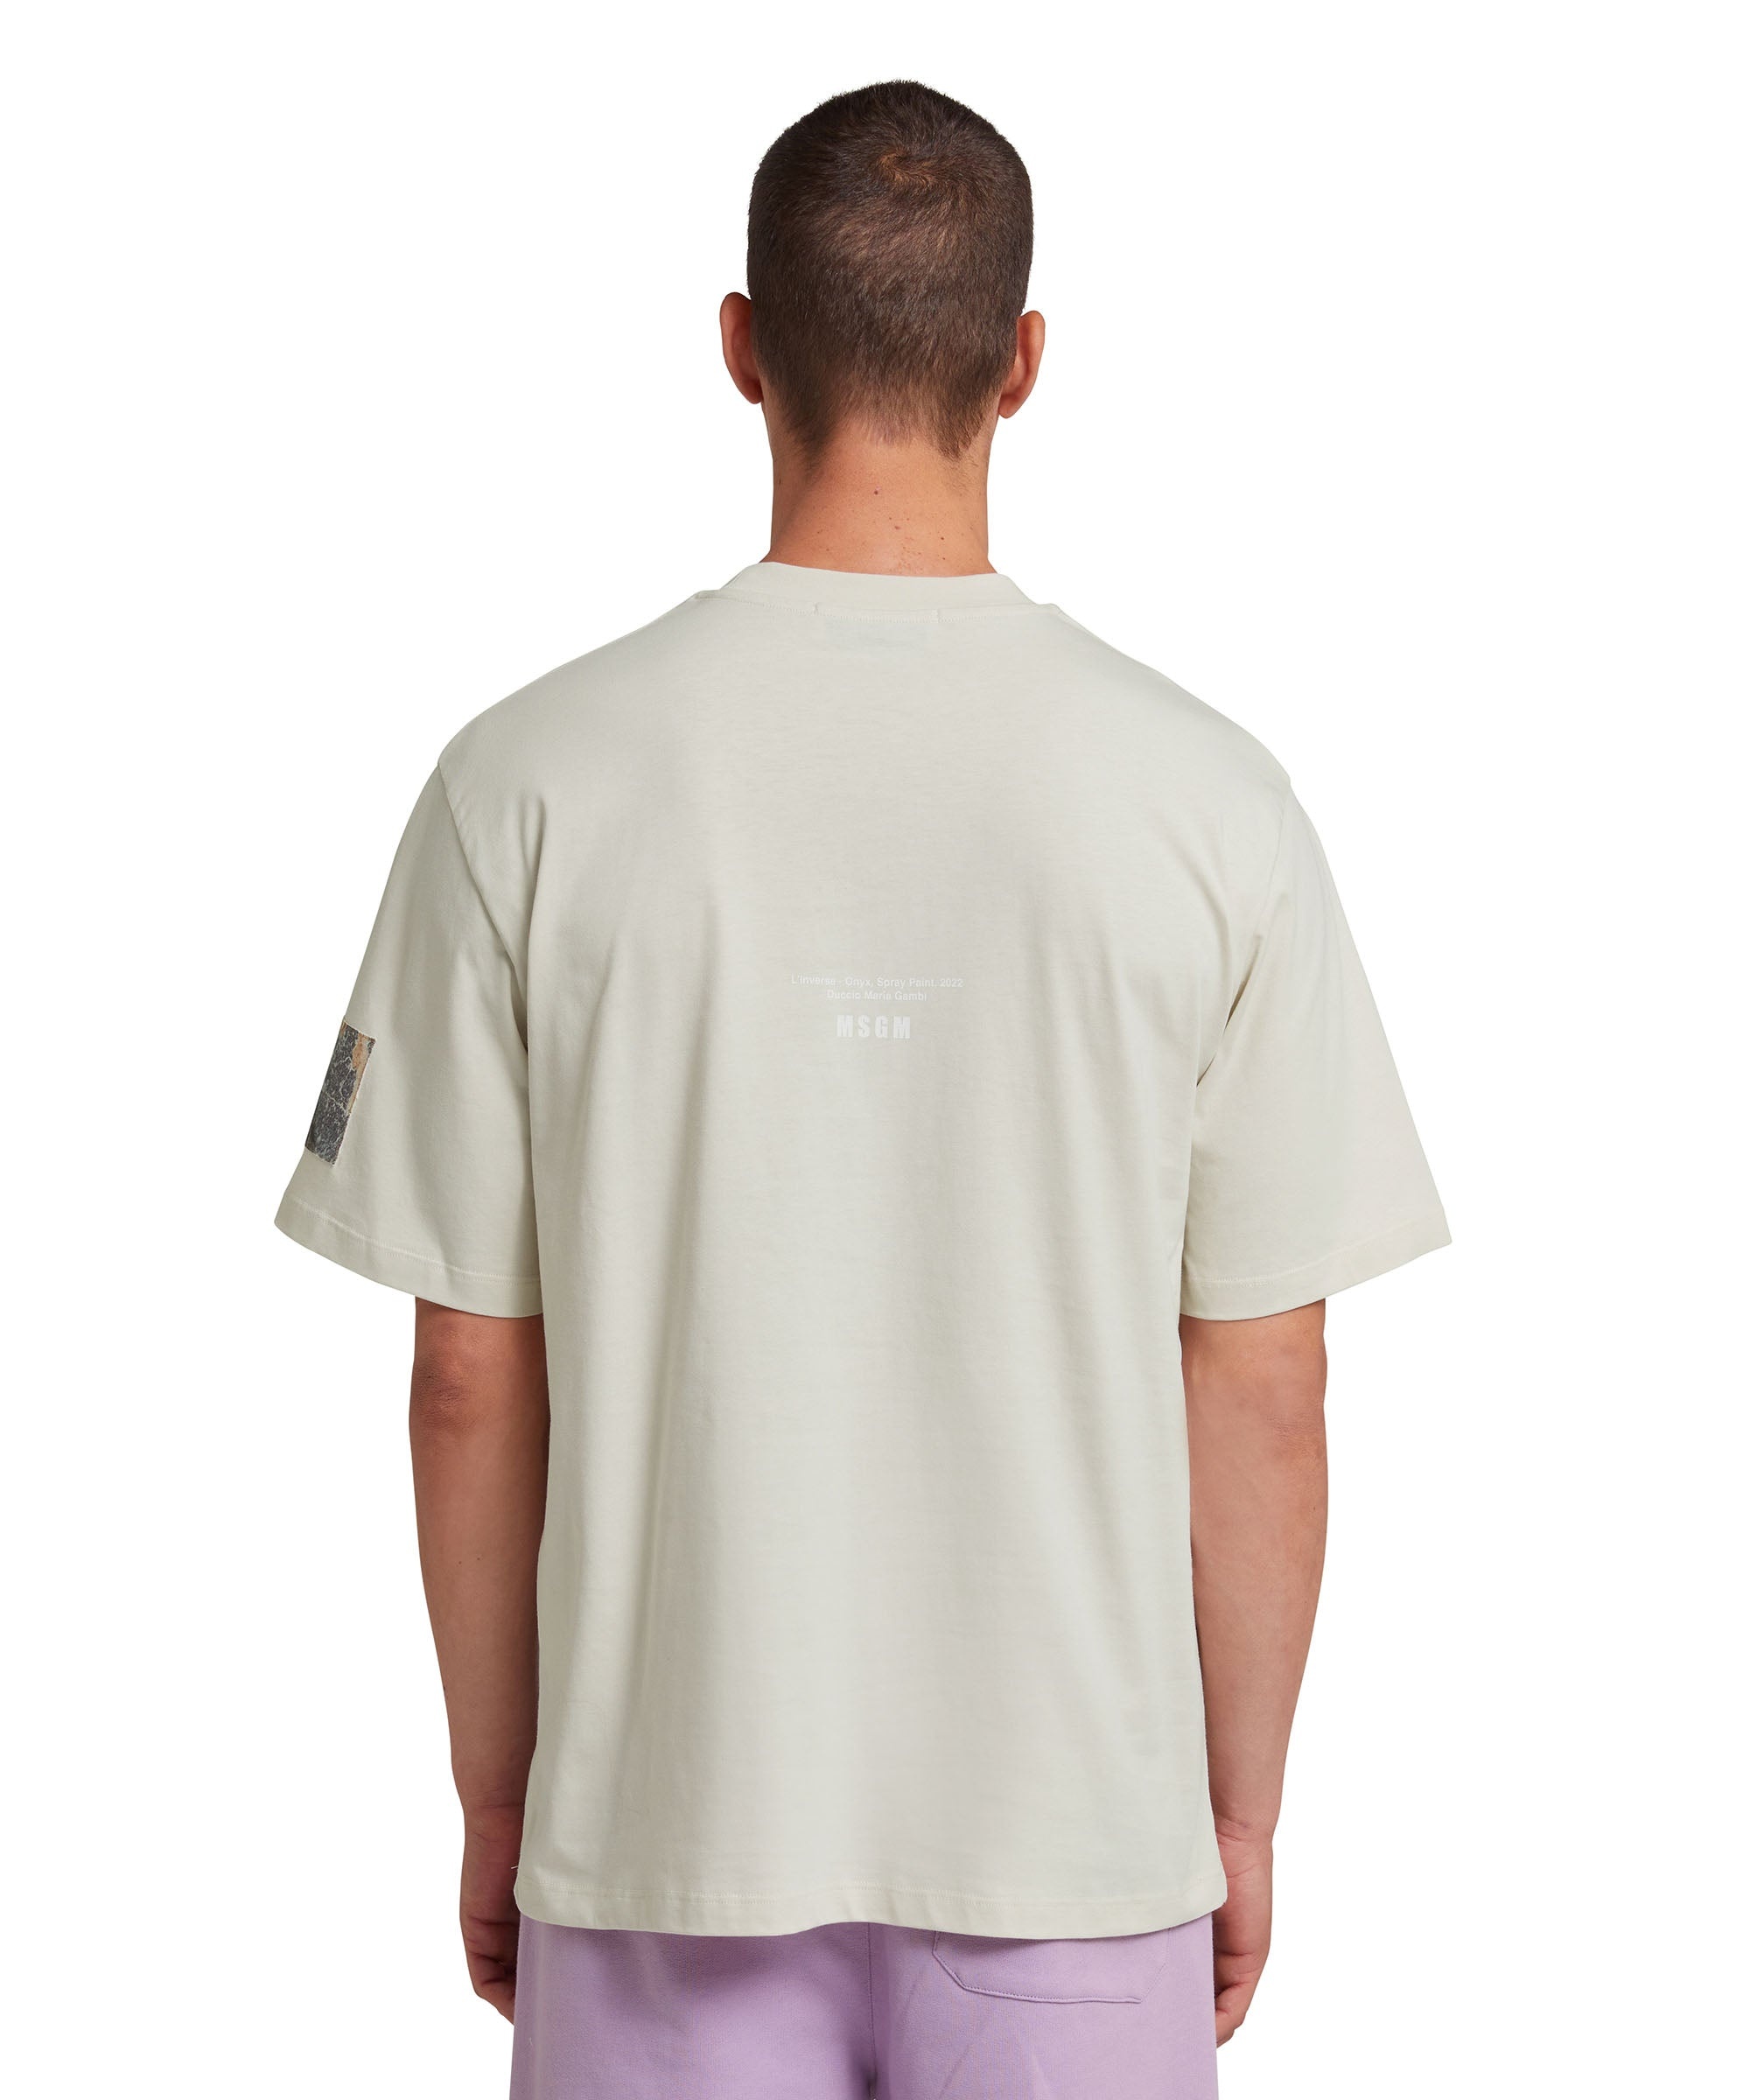 "FANTASTIC GREEN INVERSE SERIES" organic jersey cotton T-Shirt - 3